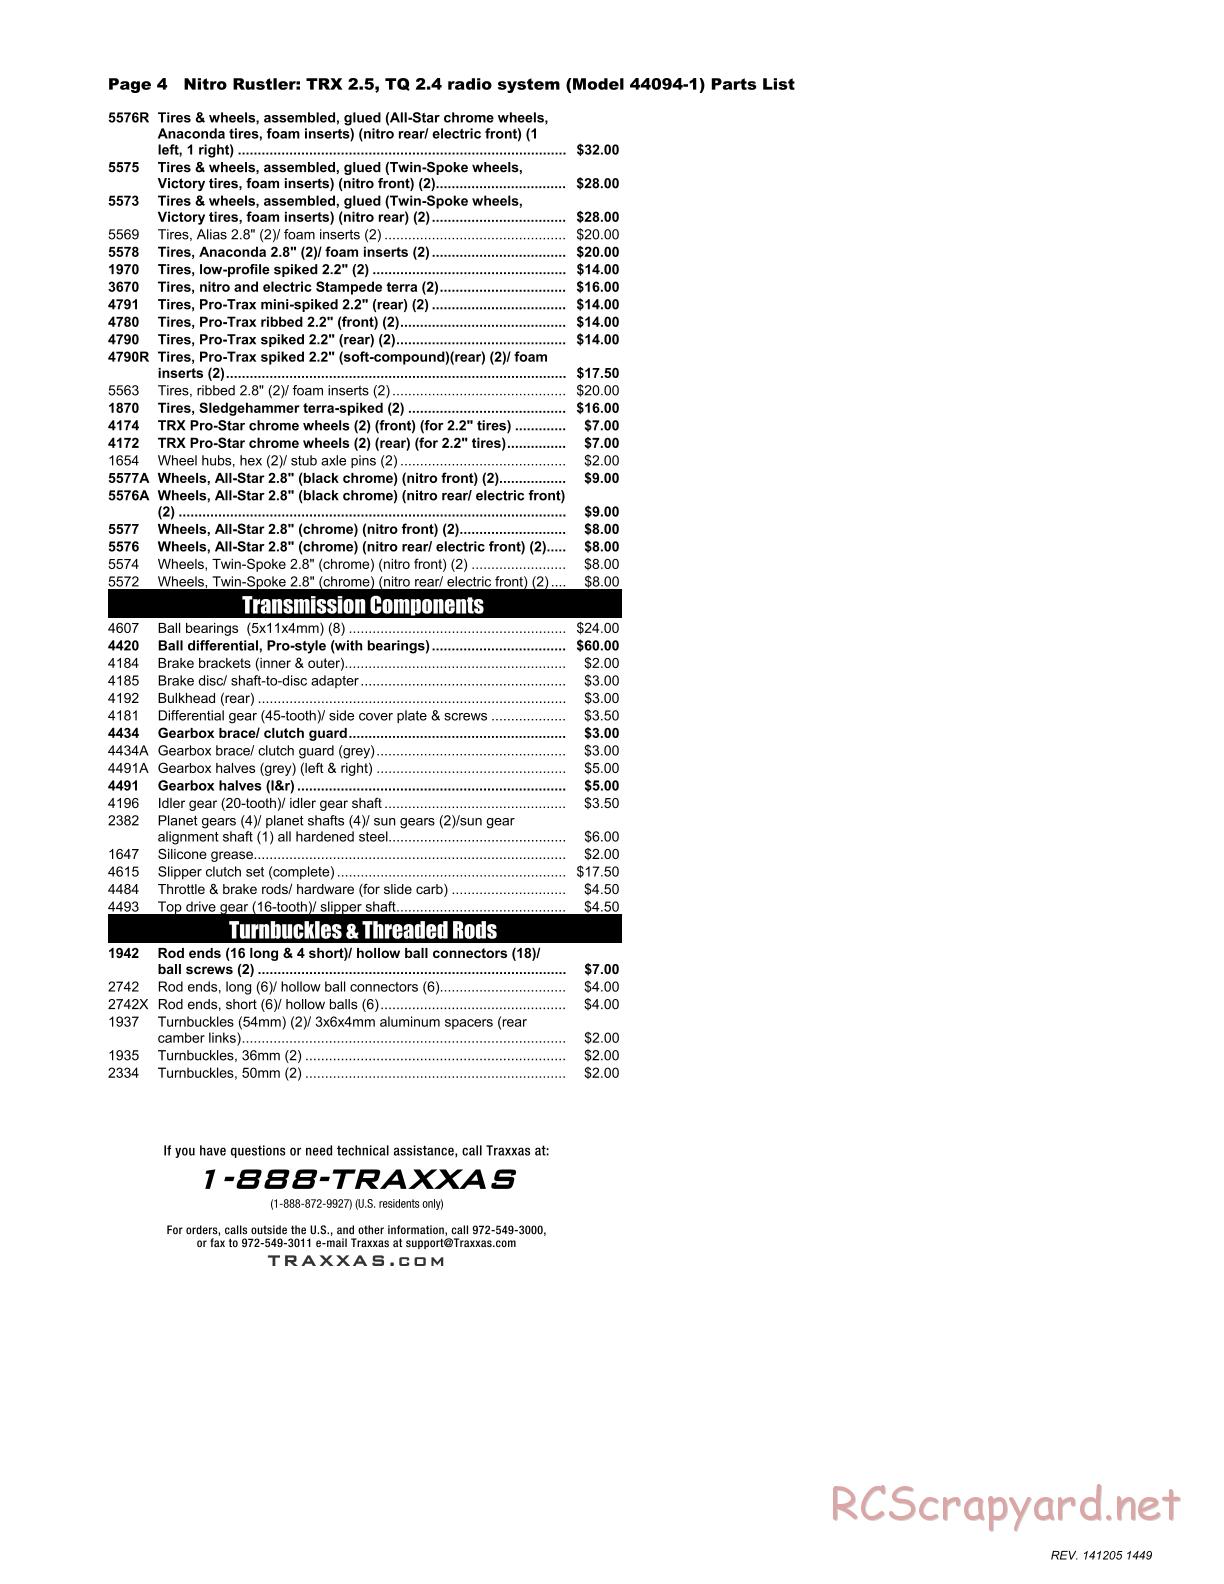 Traxxas - Nitro Rustler (2015) - Parts List - Page 4